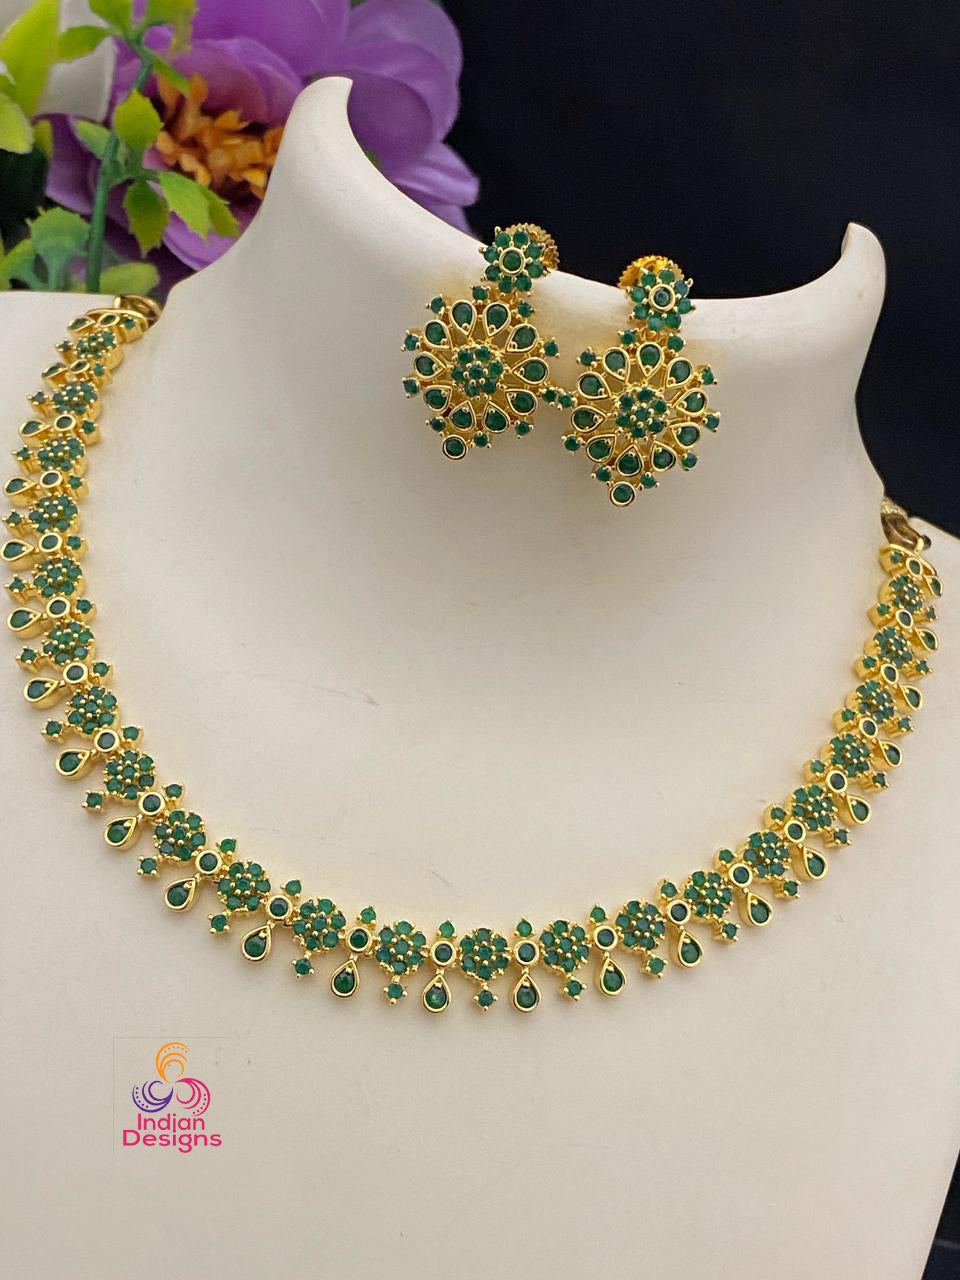 Gold Polish CZ crystal American diamond Floral choker Necklace Earring Set